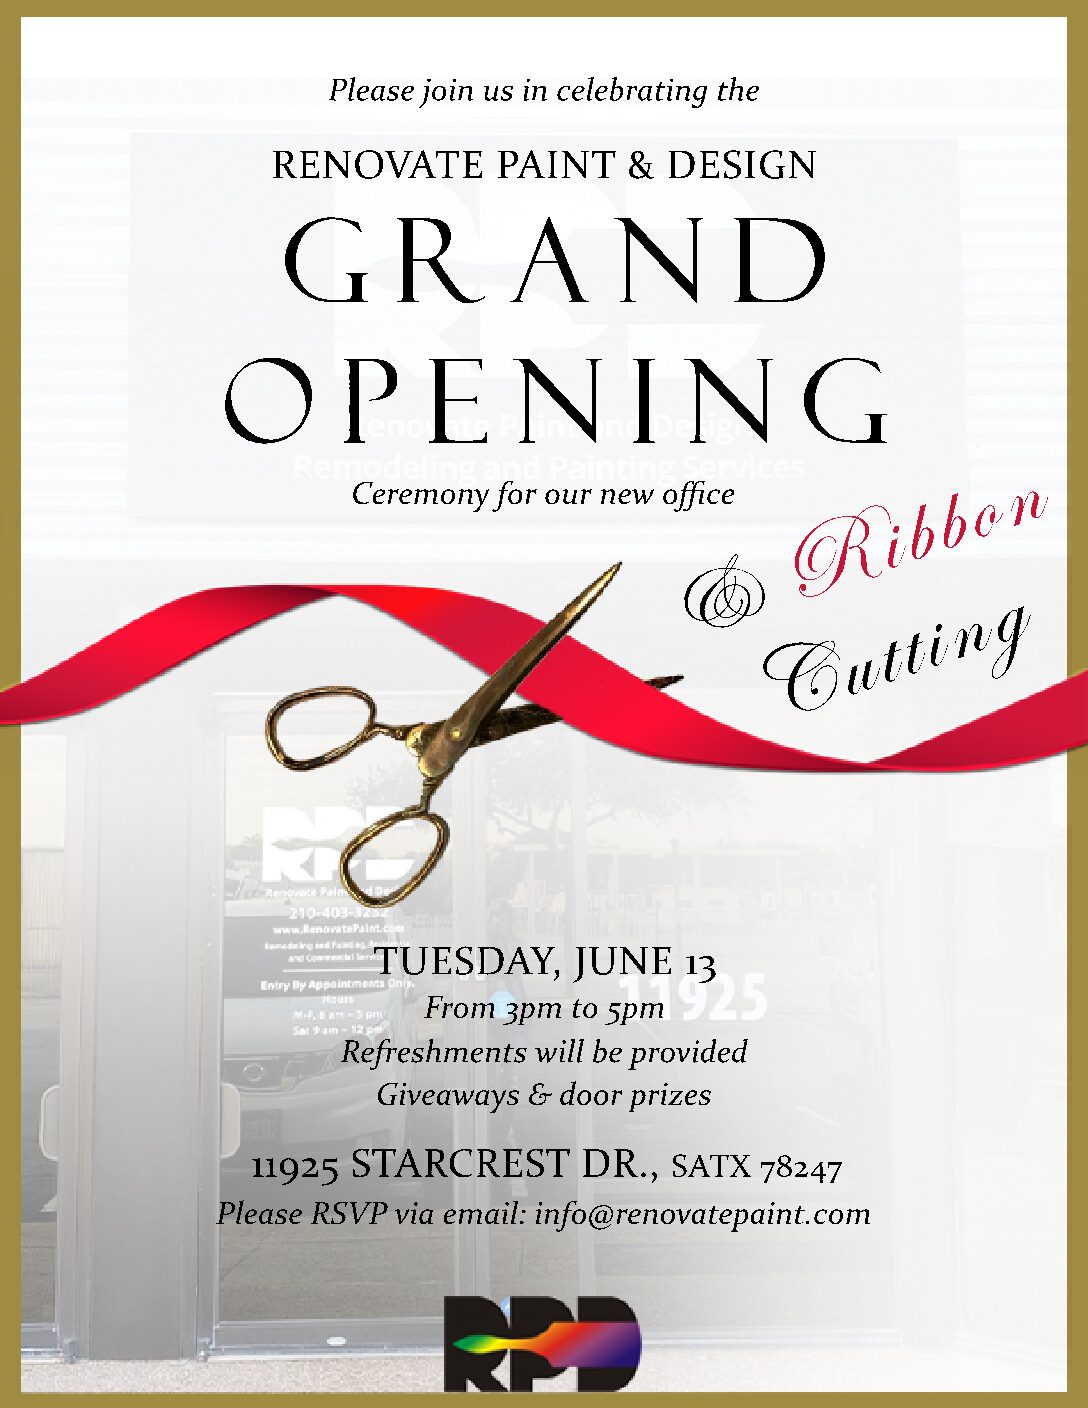 RPD grand opening celebration & ribbon cutting